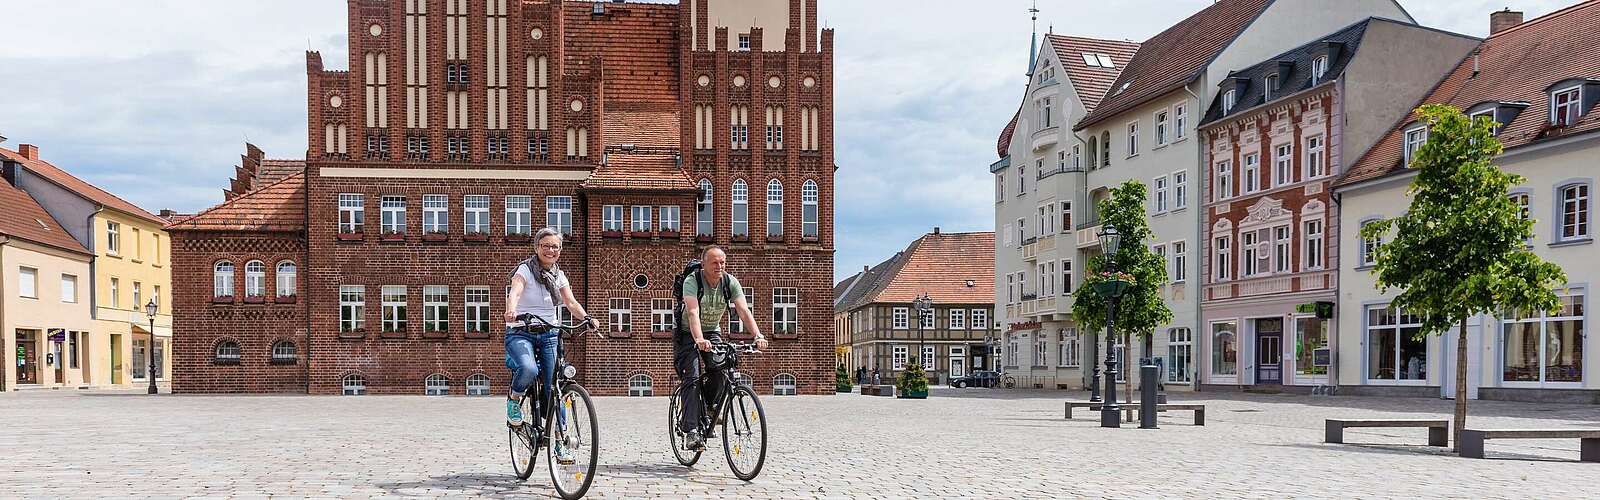 Radfahrer auf dem Marktplatz in Wittstock/Dosse,
        
    

        Foto: Tourismusverband Prignitz e.V./Markus Tiemann